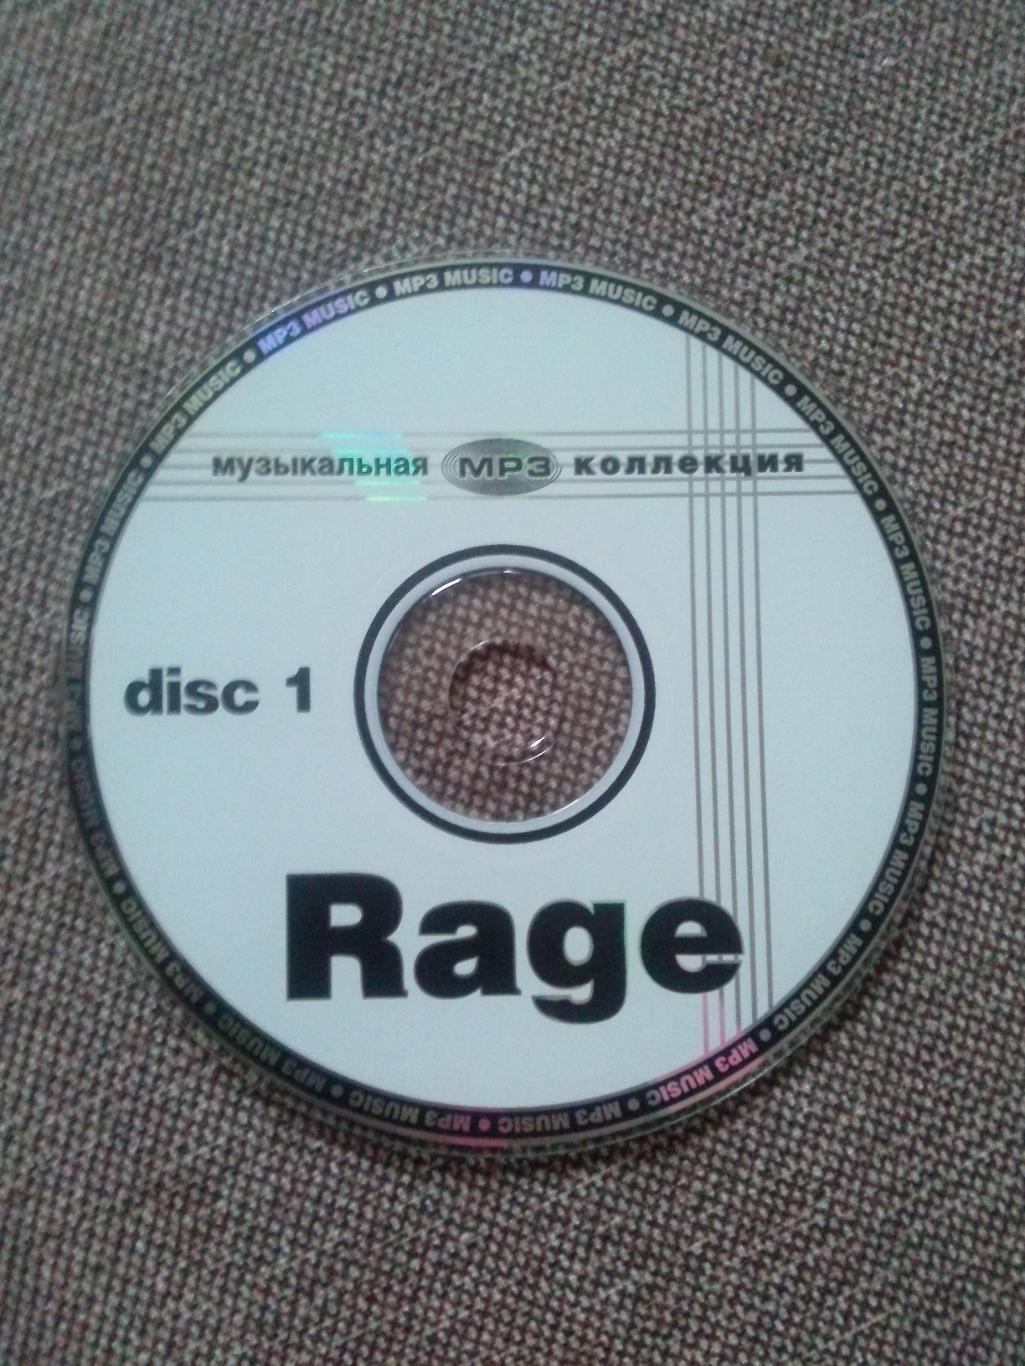 MP - 3 CD диск : группаRage1986 - 1992 гг. (8 альбомов) Thrash metal Рок 1